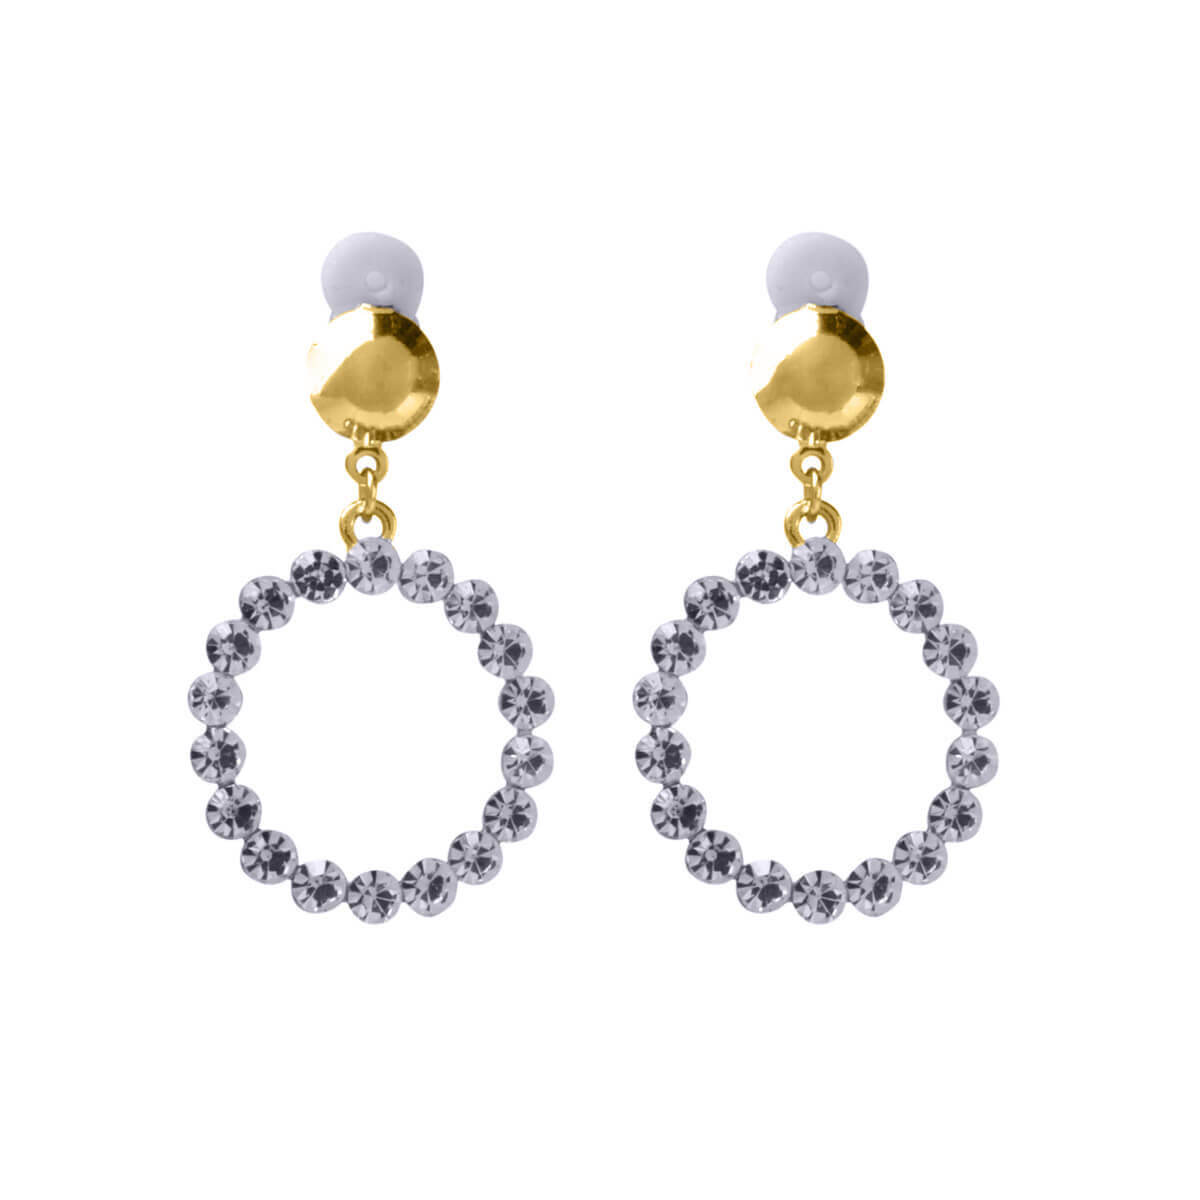 Rhinestone ring clip earrings